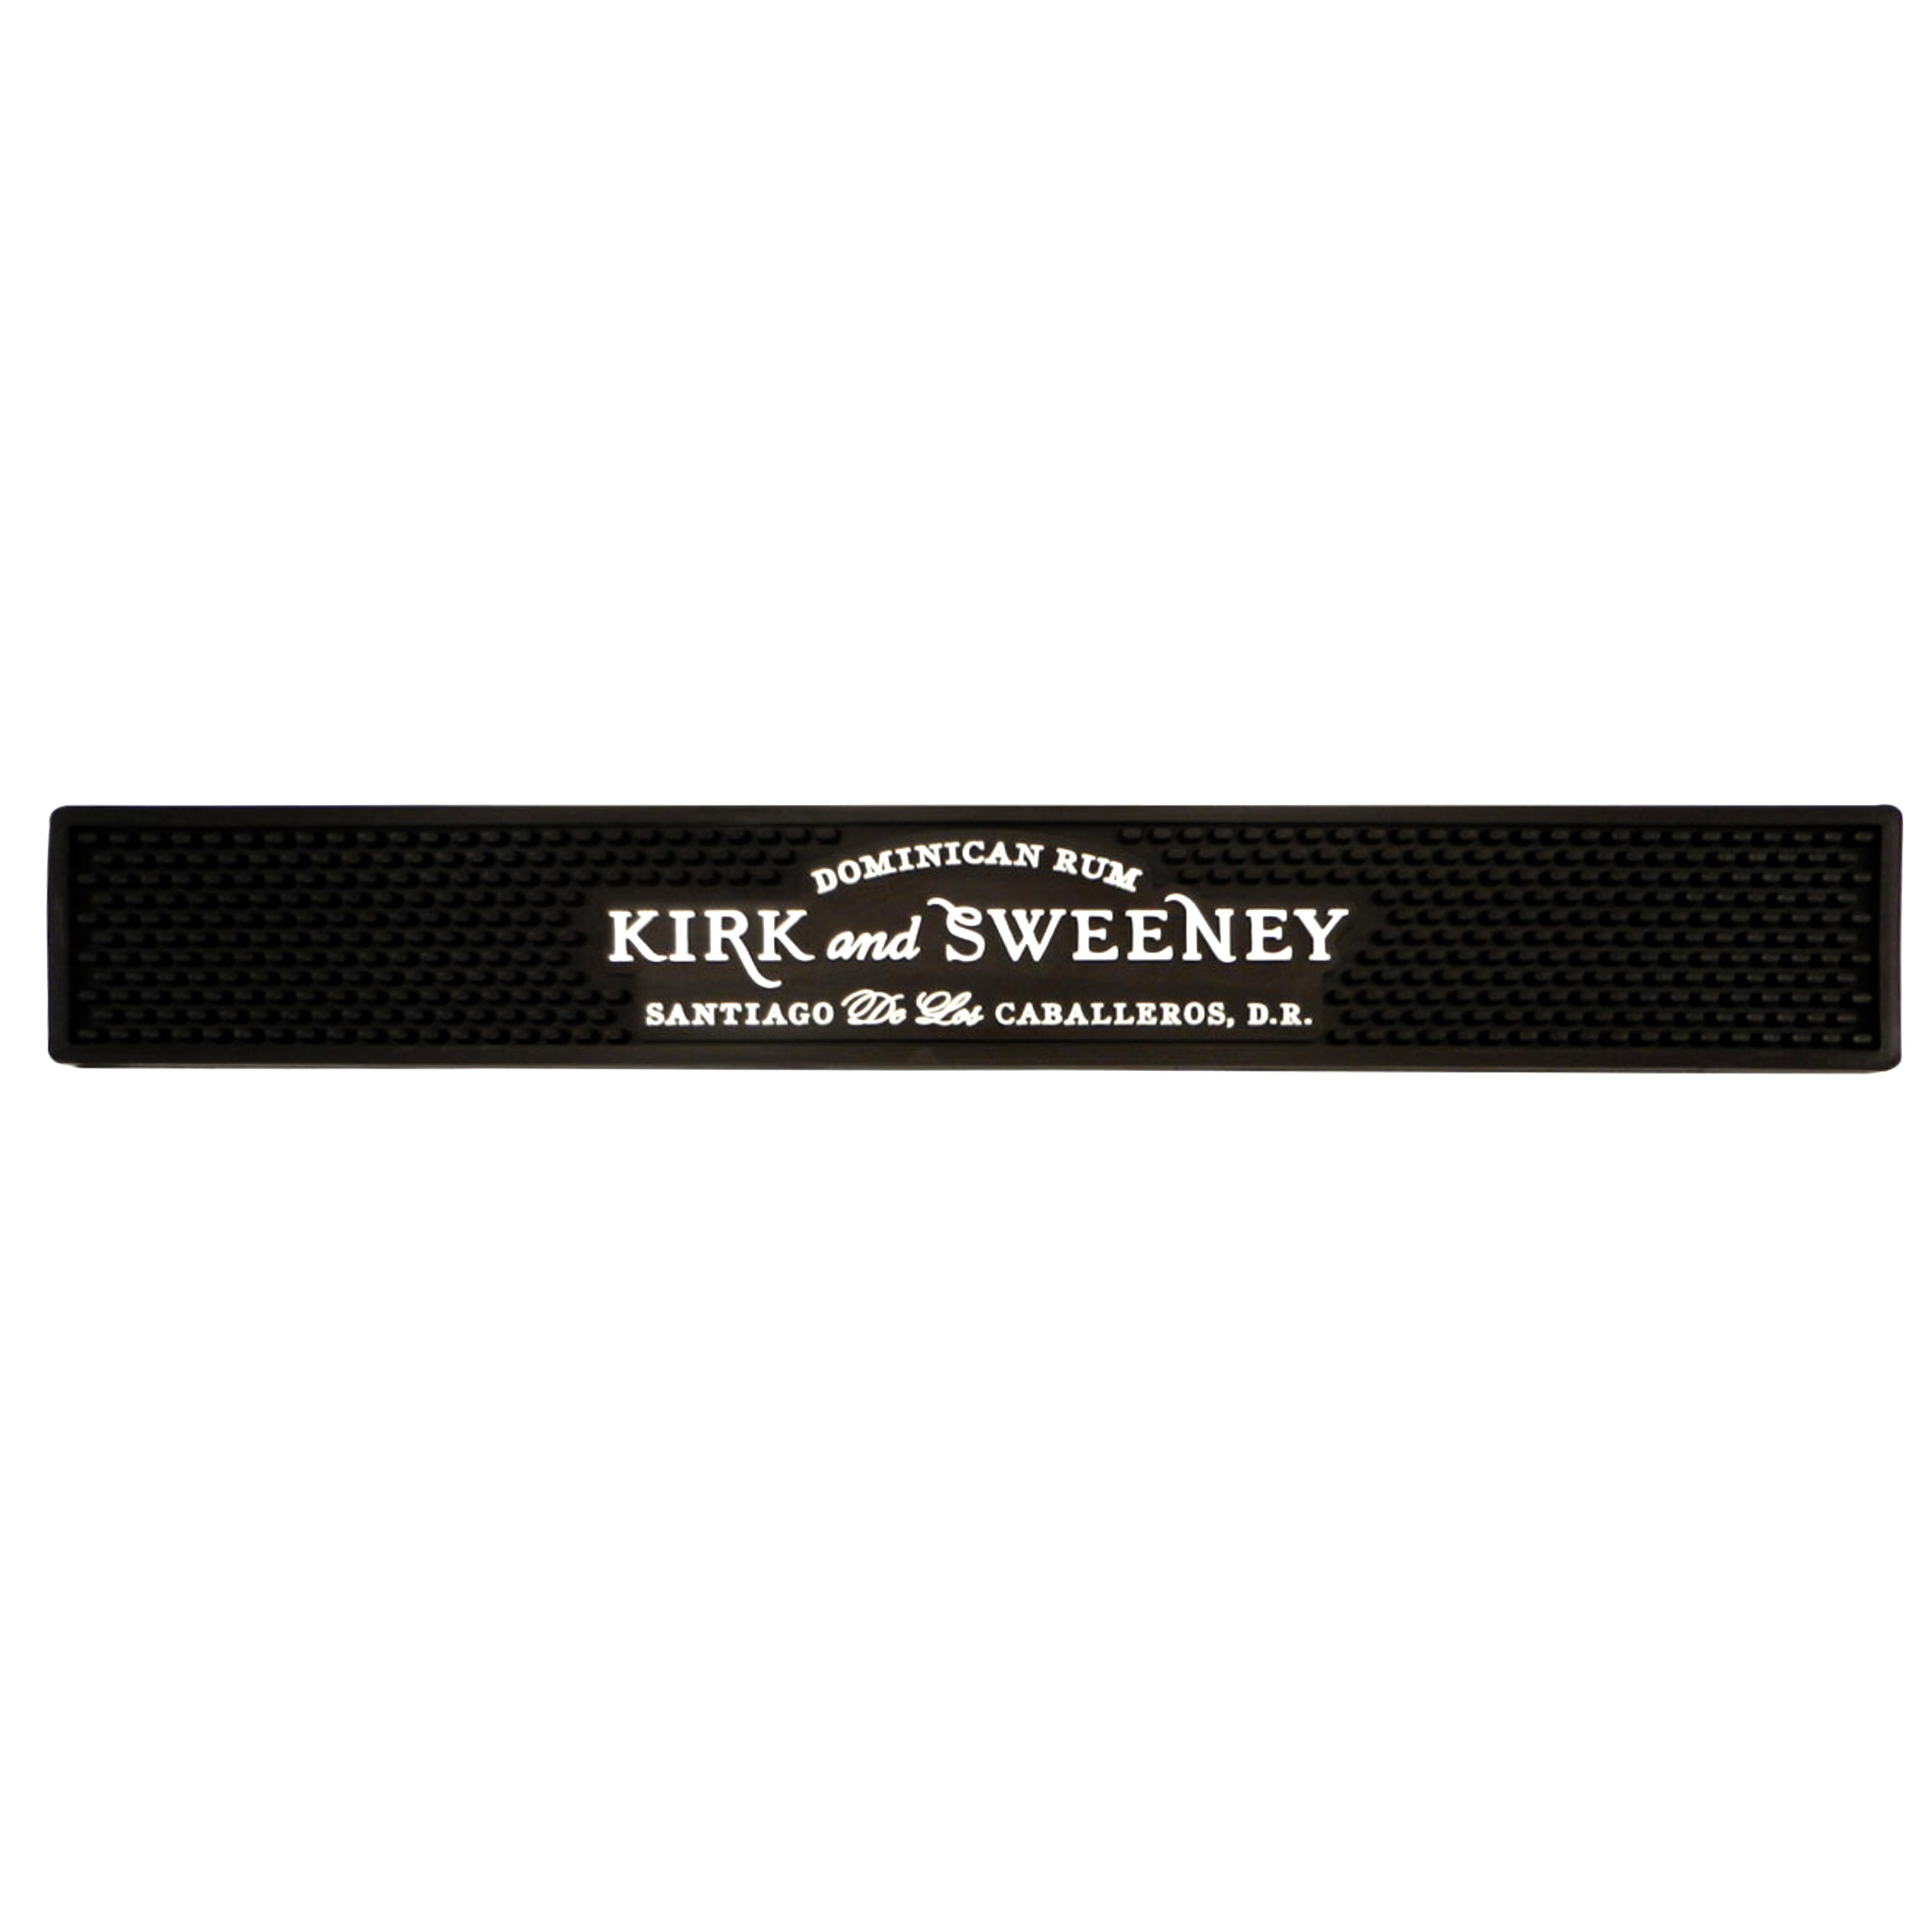 Kirk and Sweeney Rail Mat